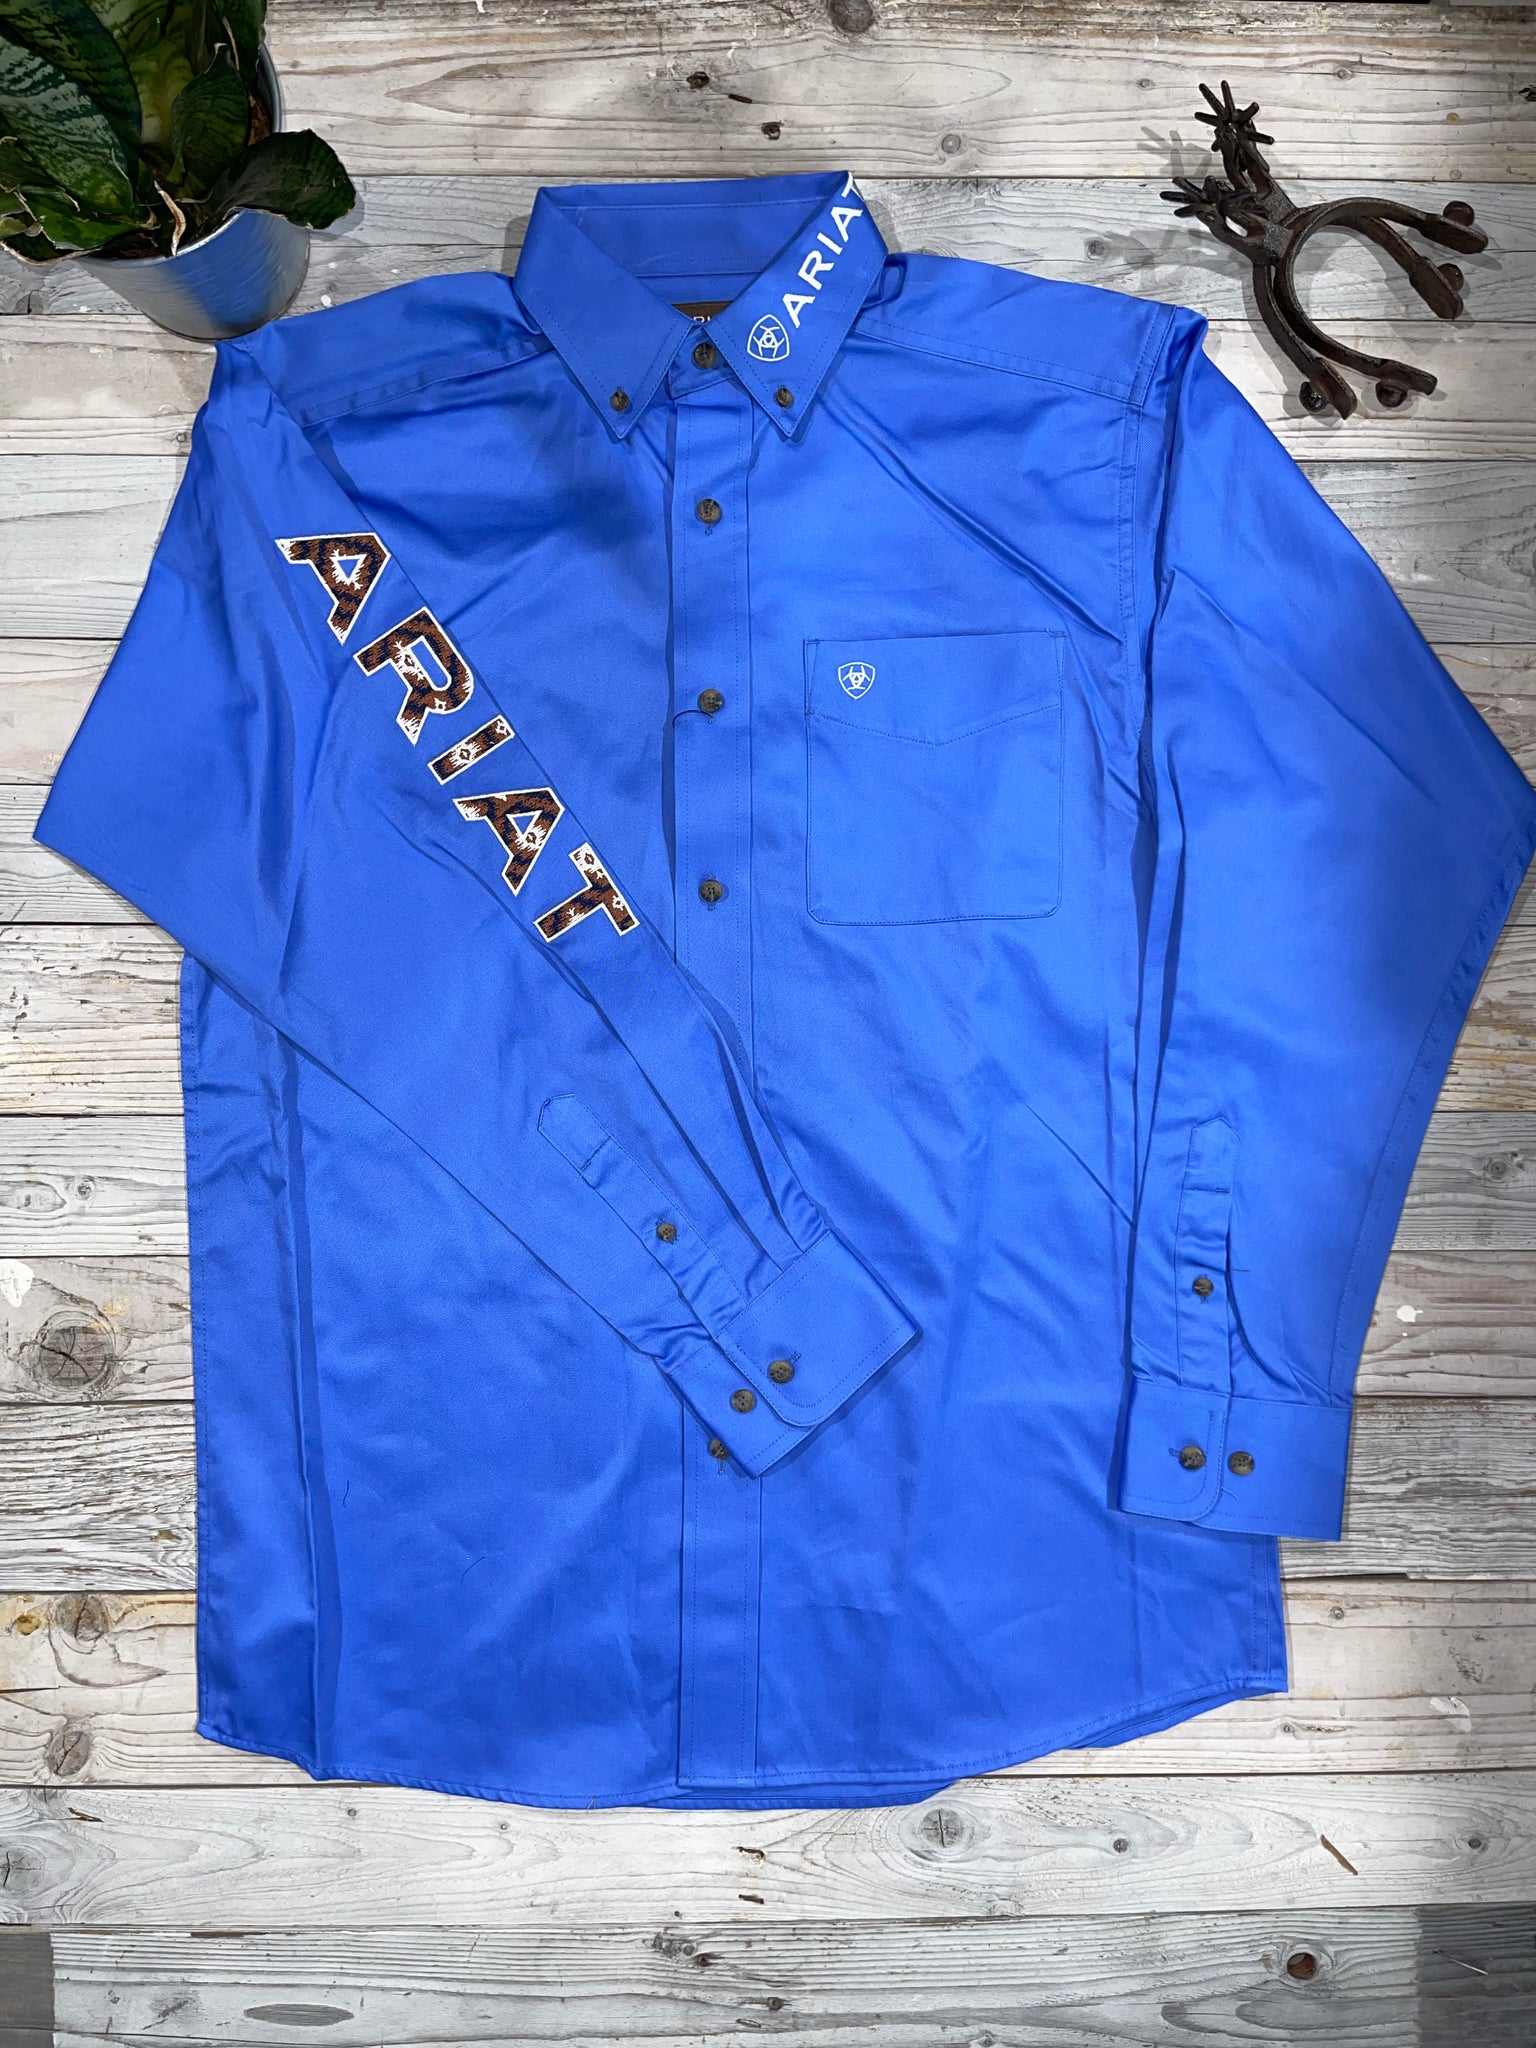 Ariat Team logo Blue/Bread Twill Shirt